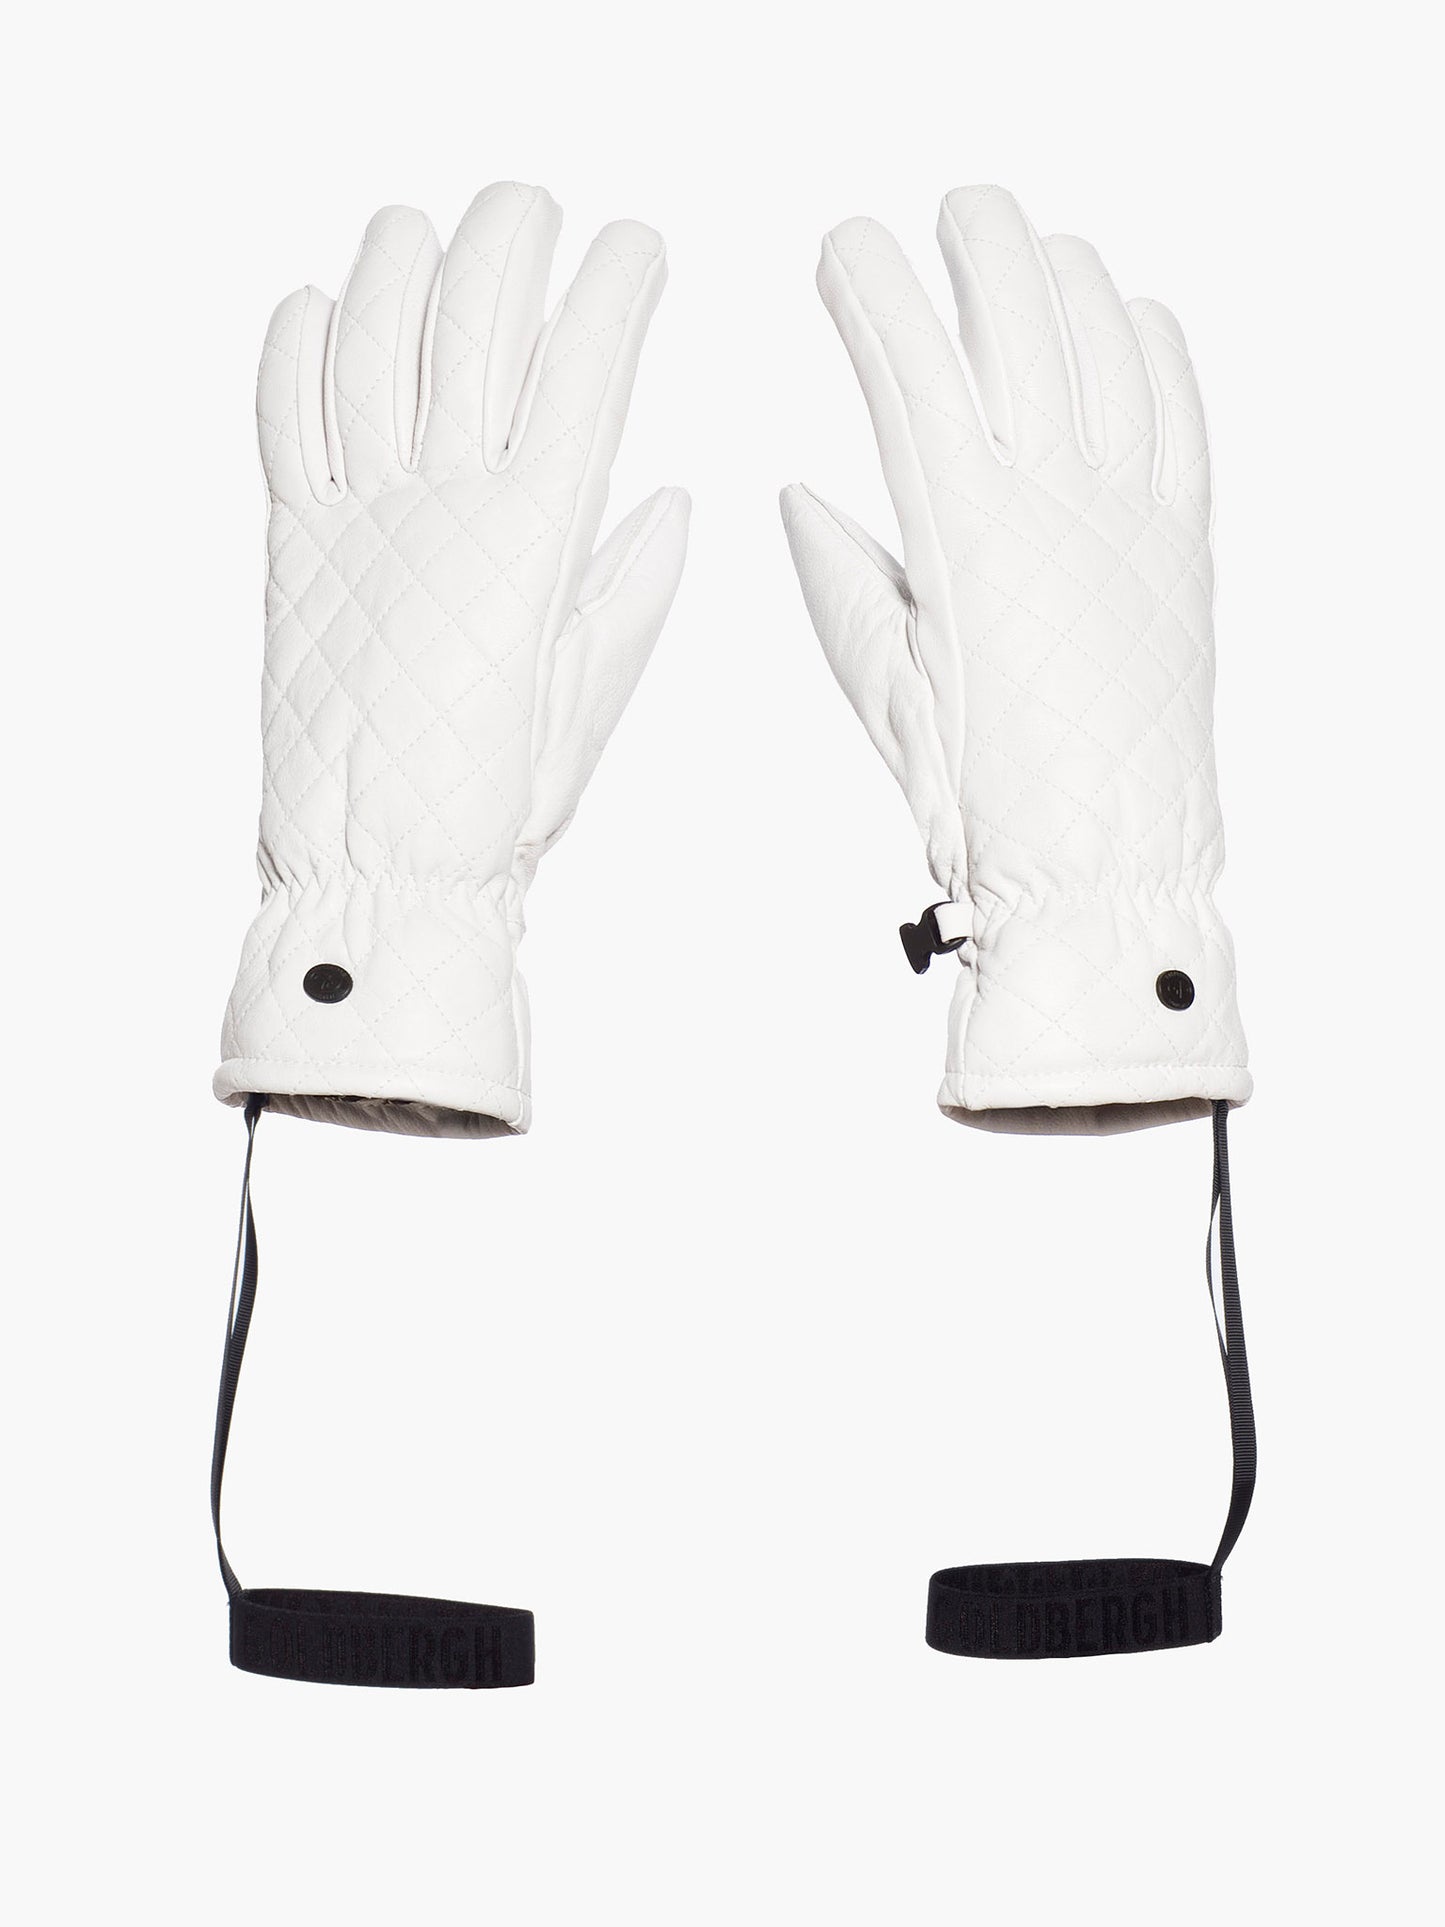 NISHI gloves